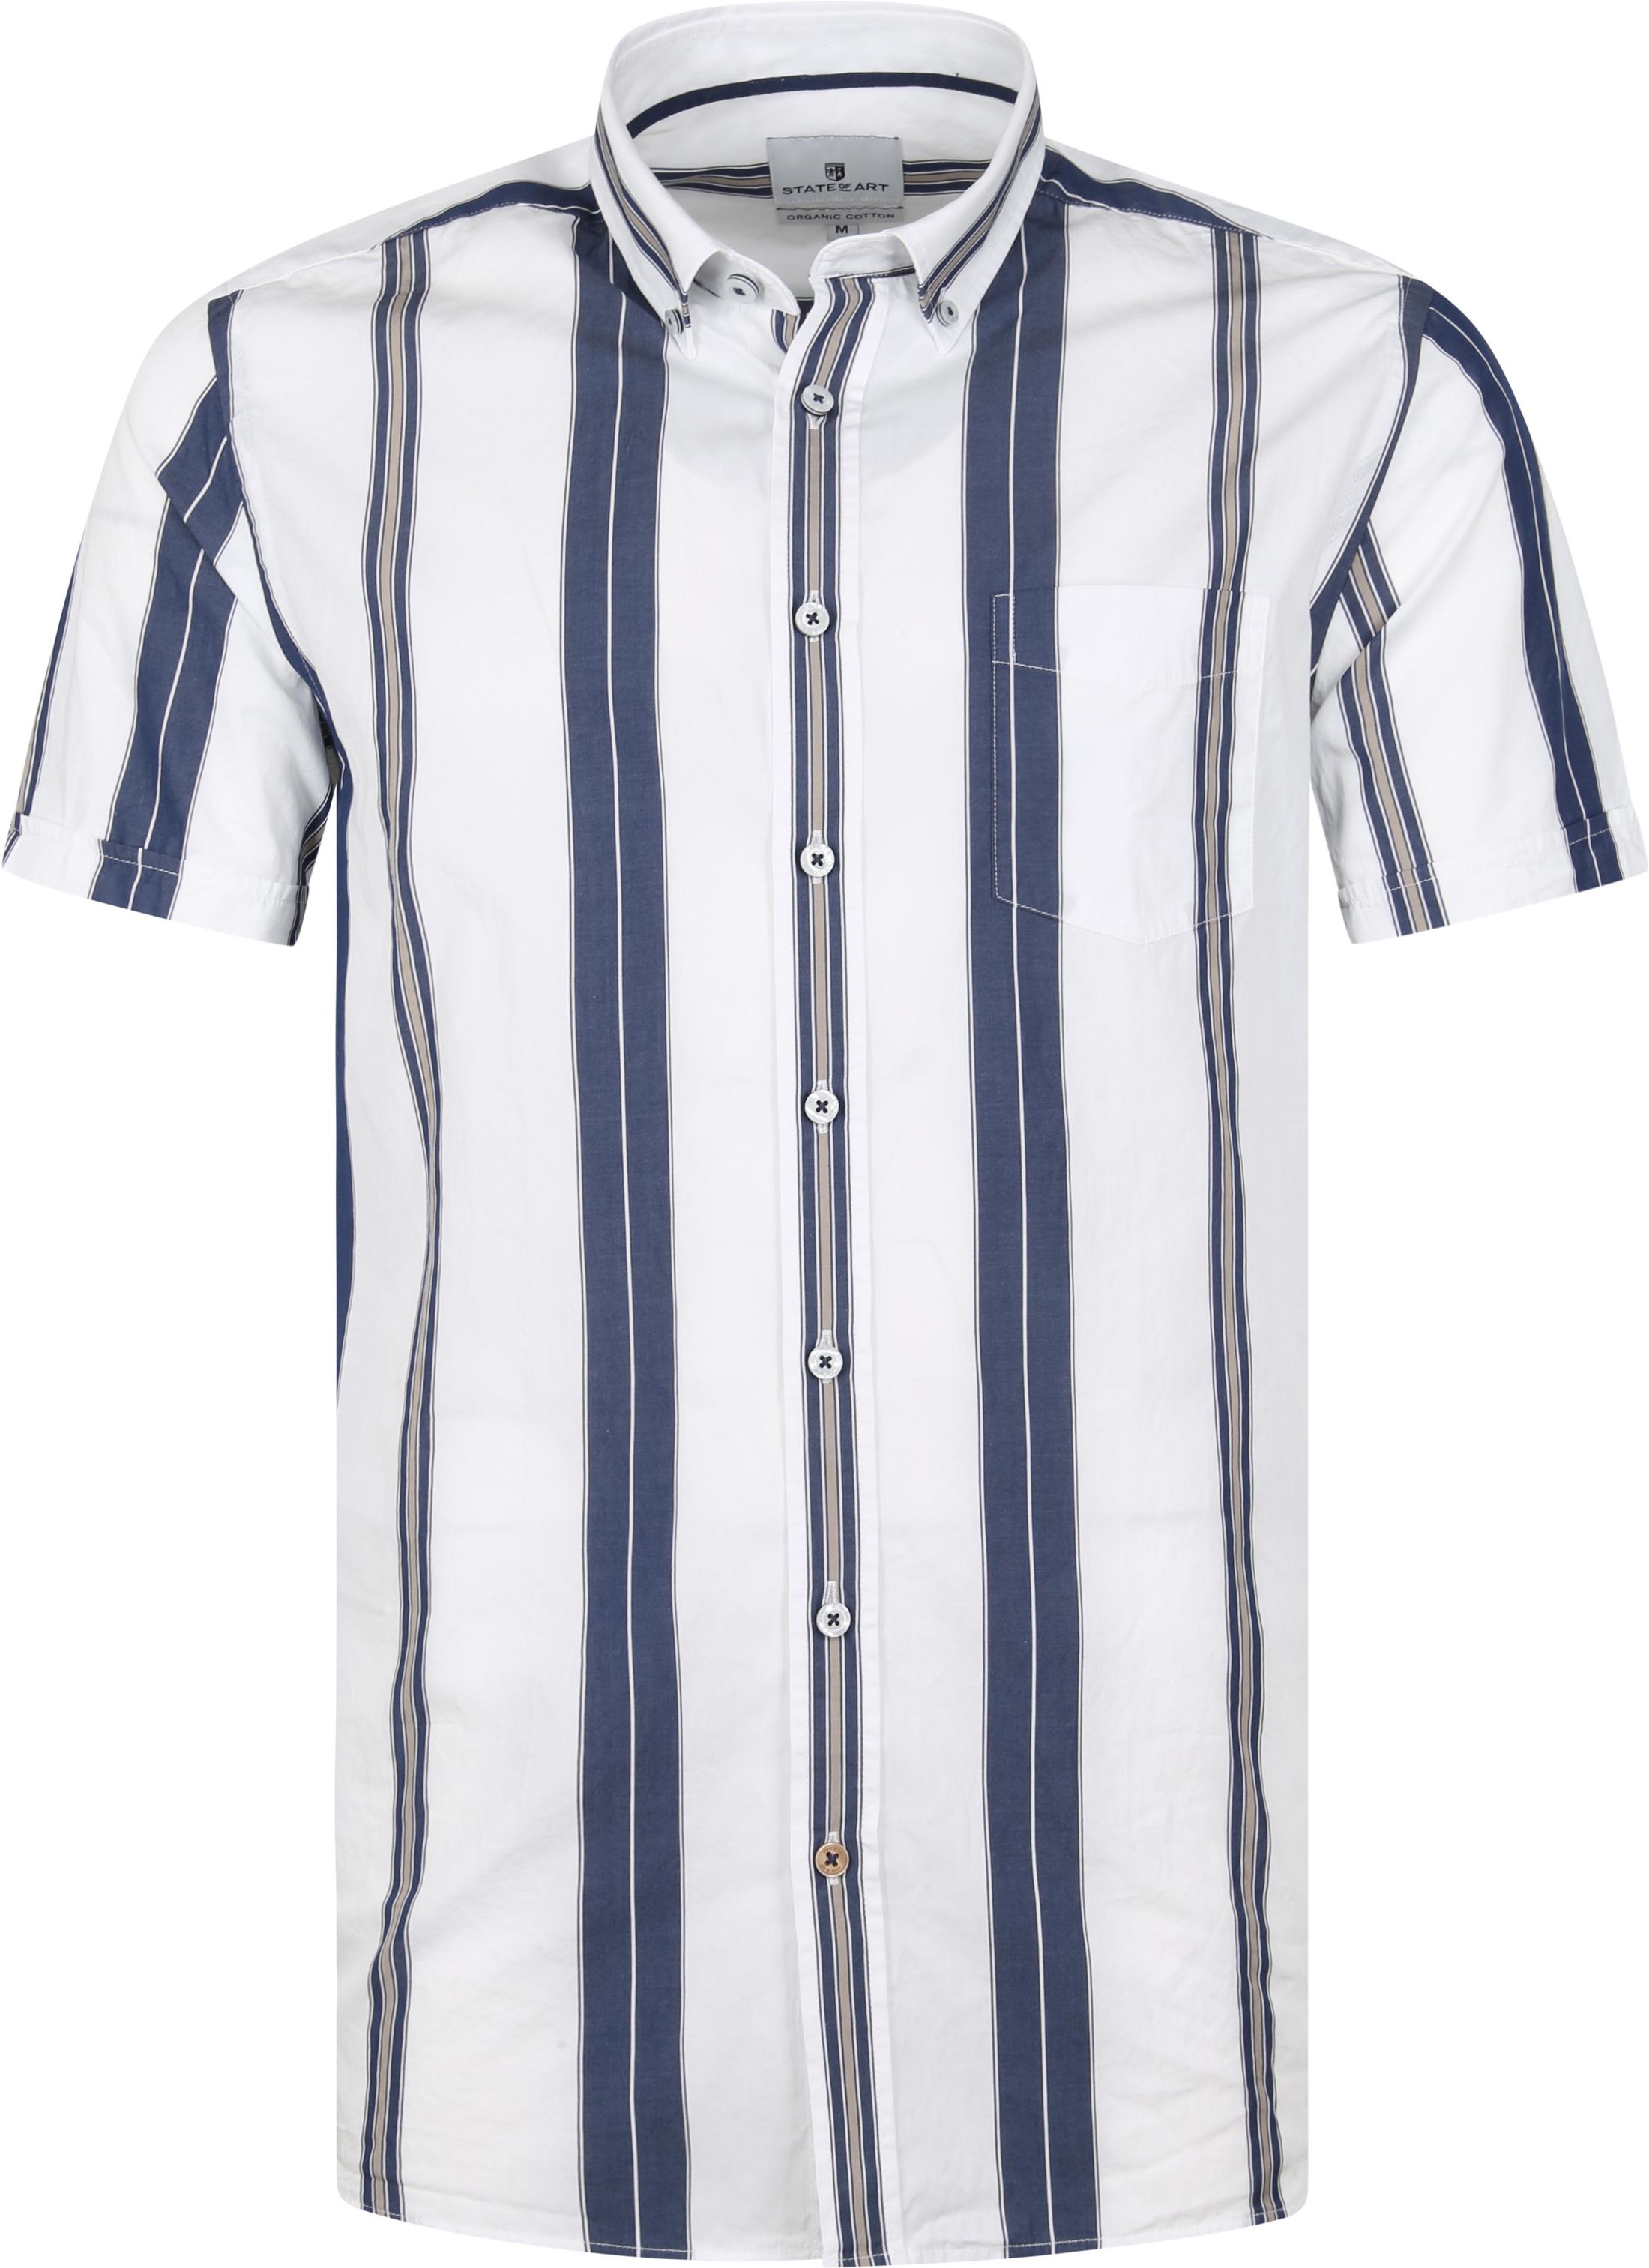 State Of Art Shortsleeve Shirt Striped Blue White size M